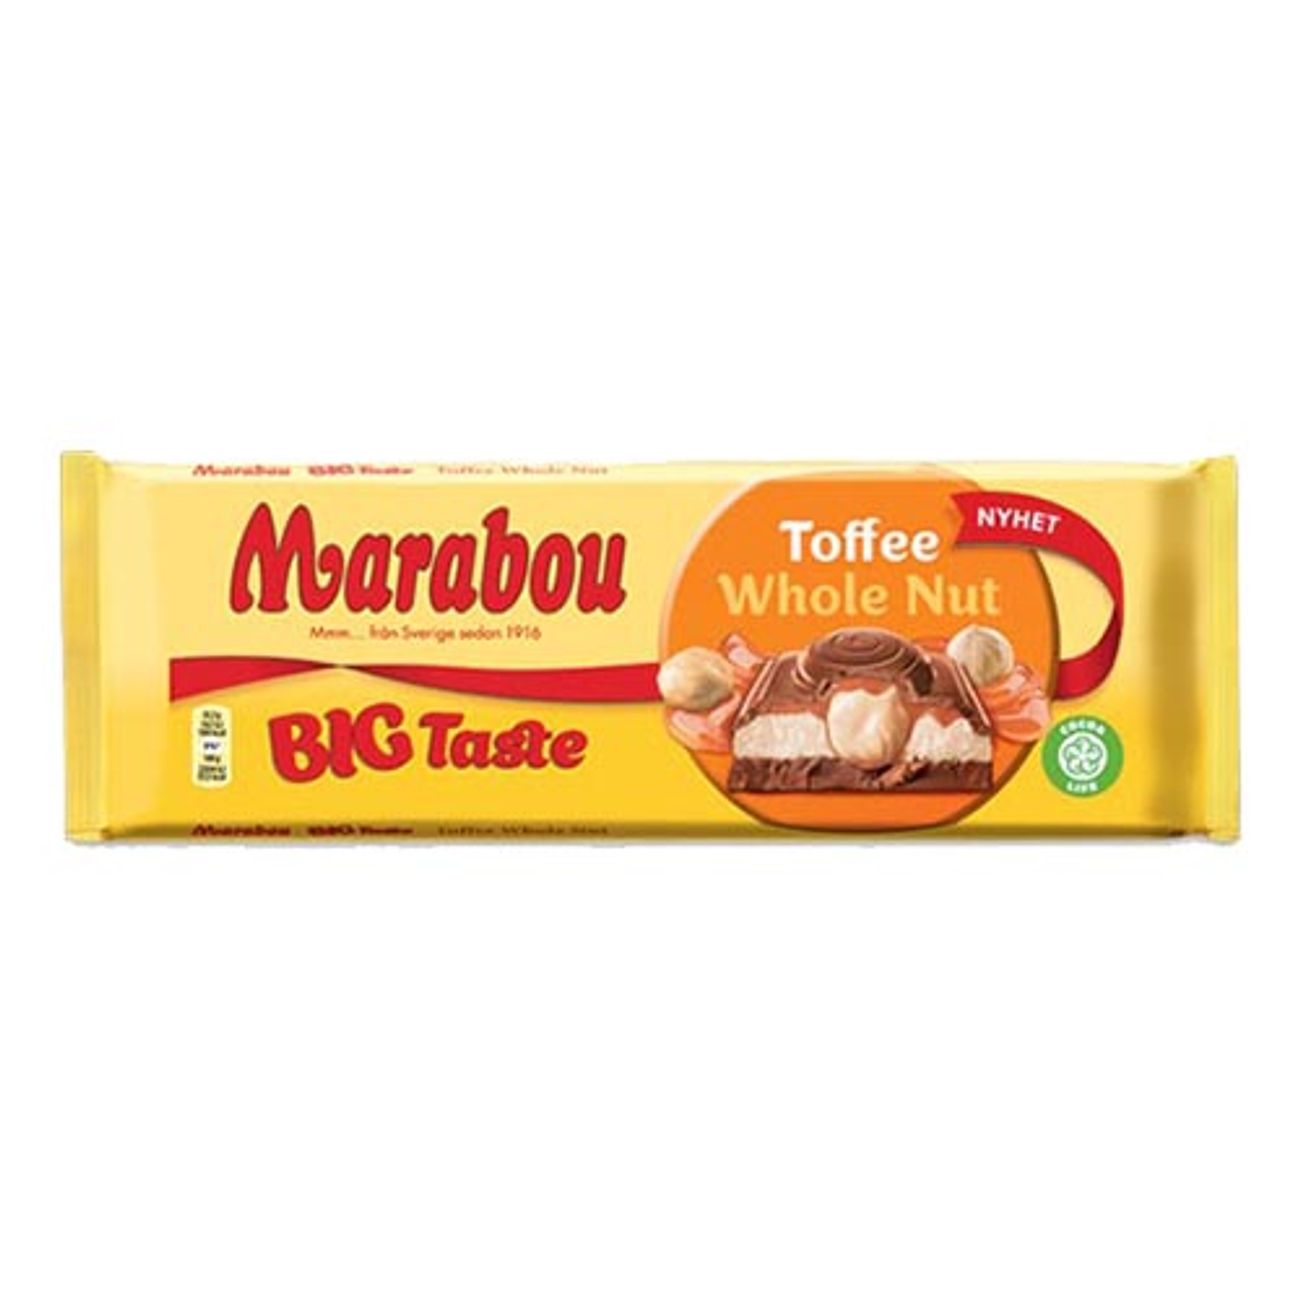 marabou-big-taste-toffee-whole-nut-chokladkaka-1